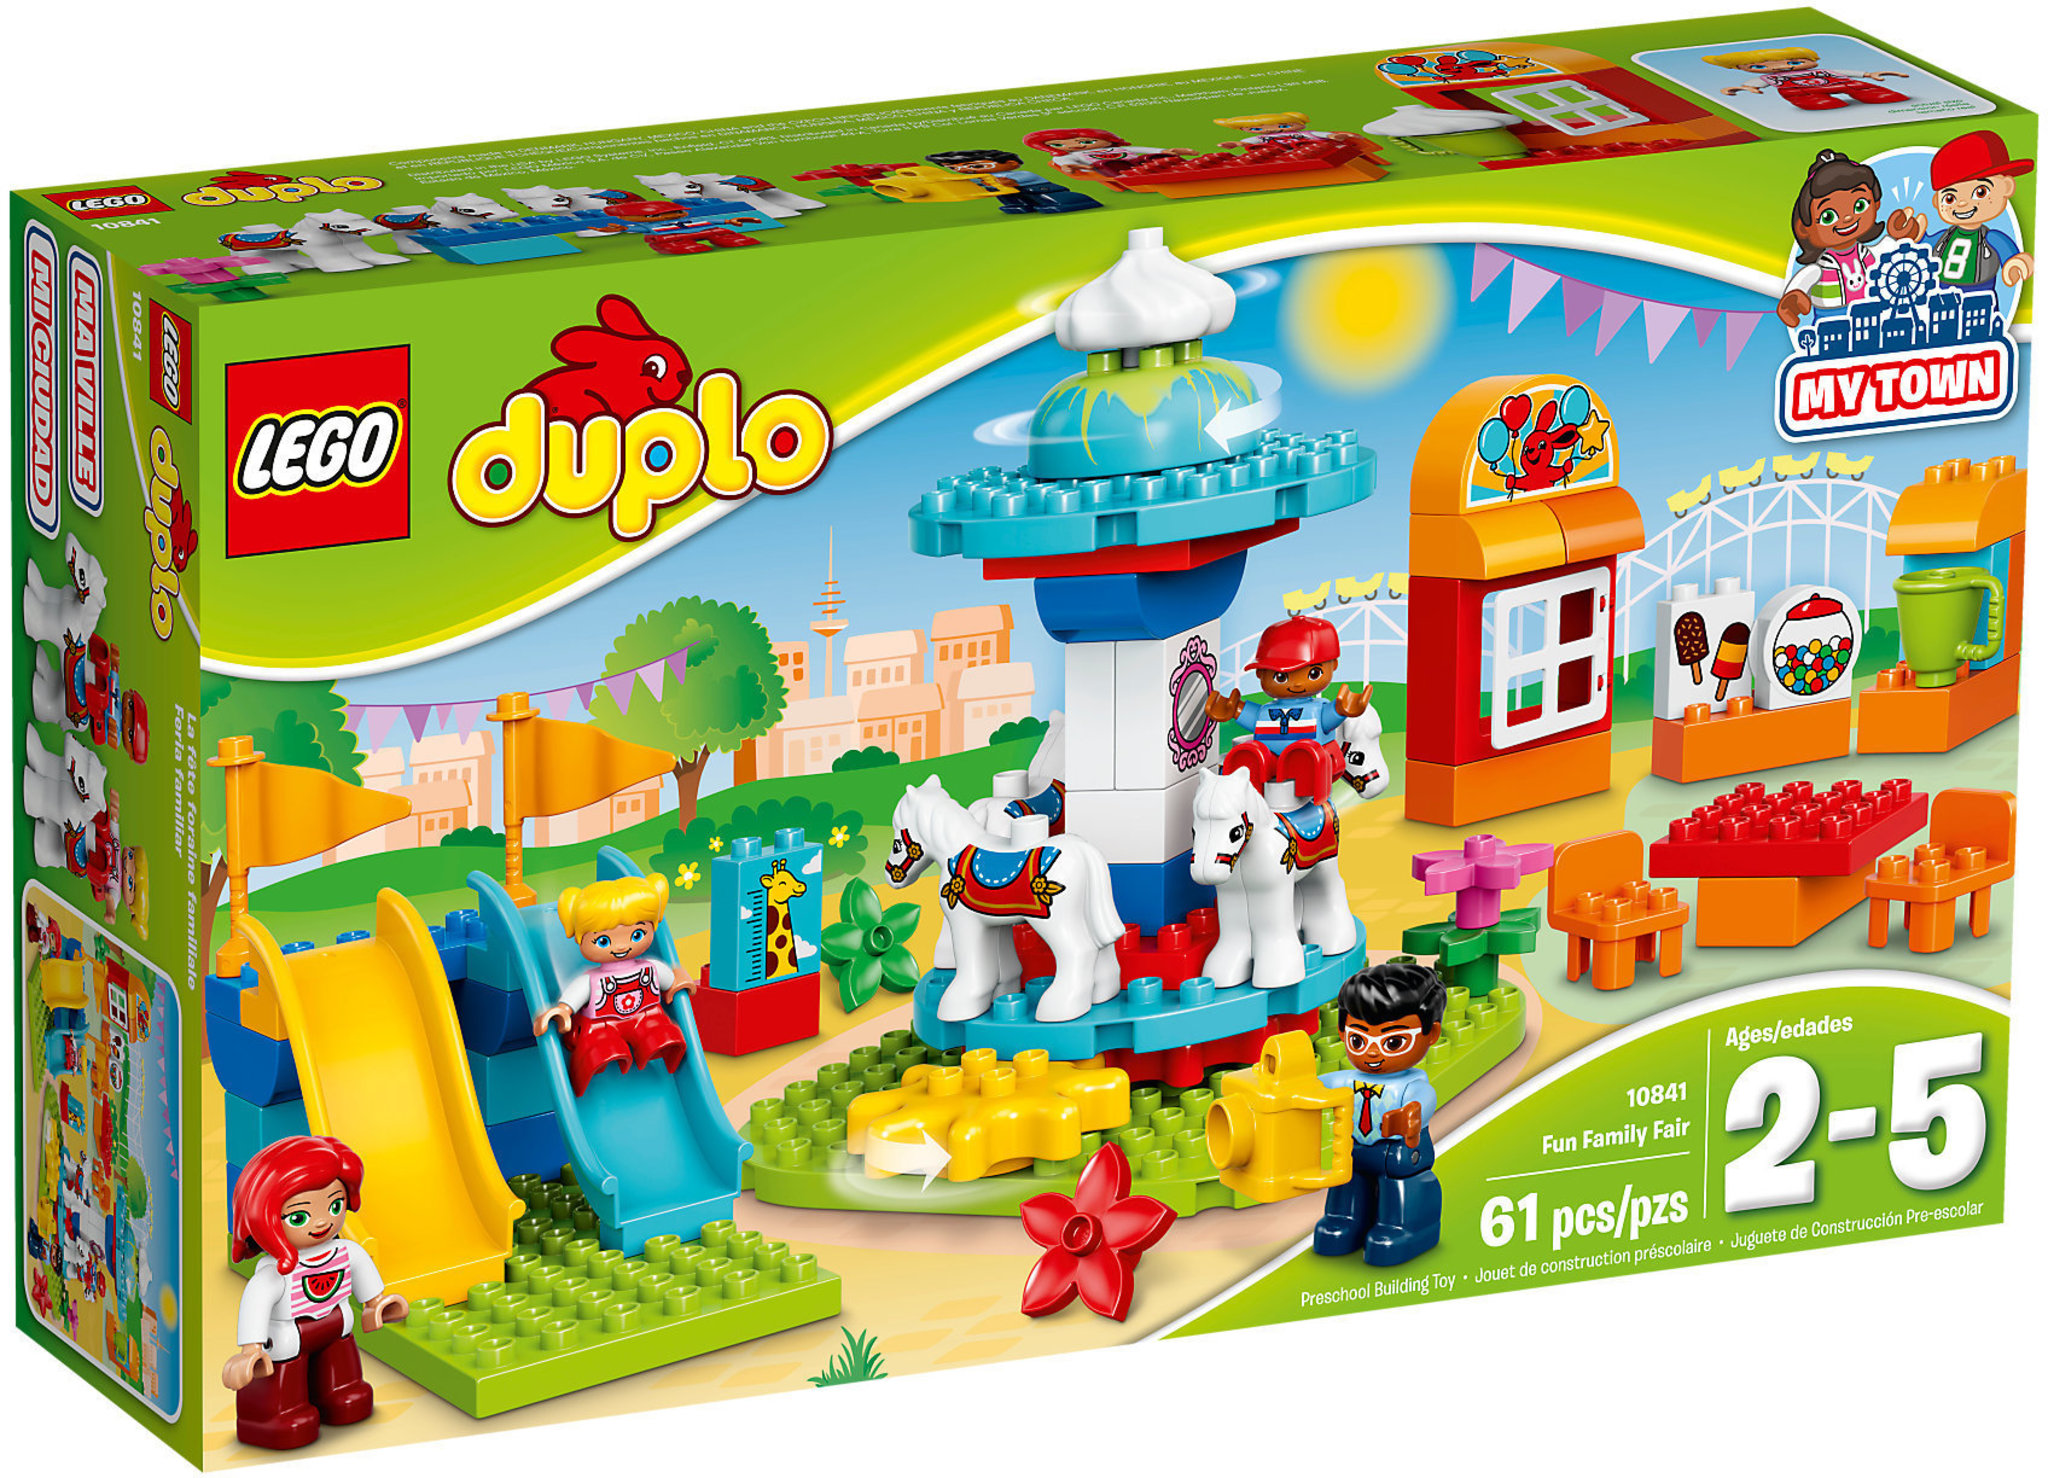 LEGO Duplo 10841 - Fun Family Fair